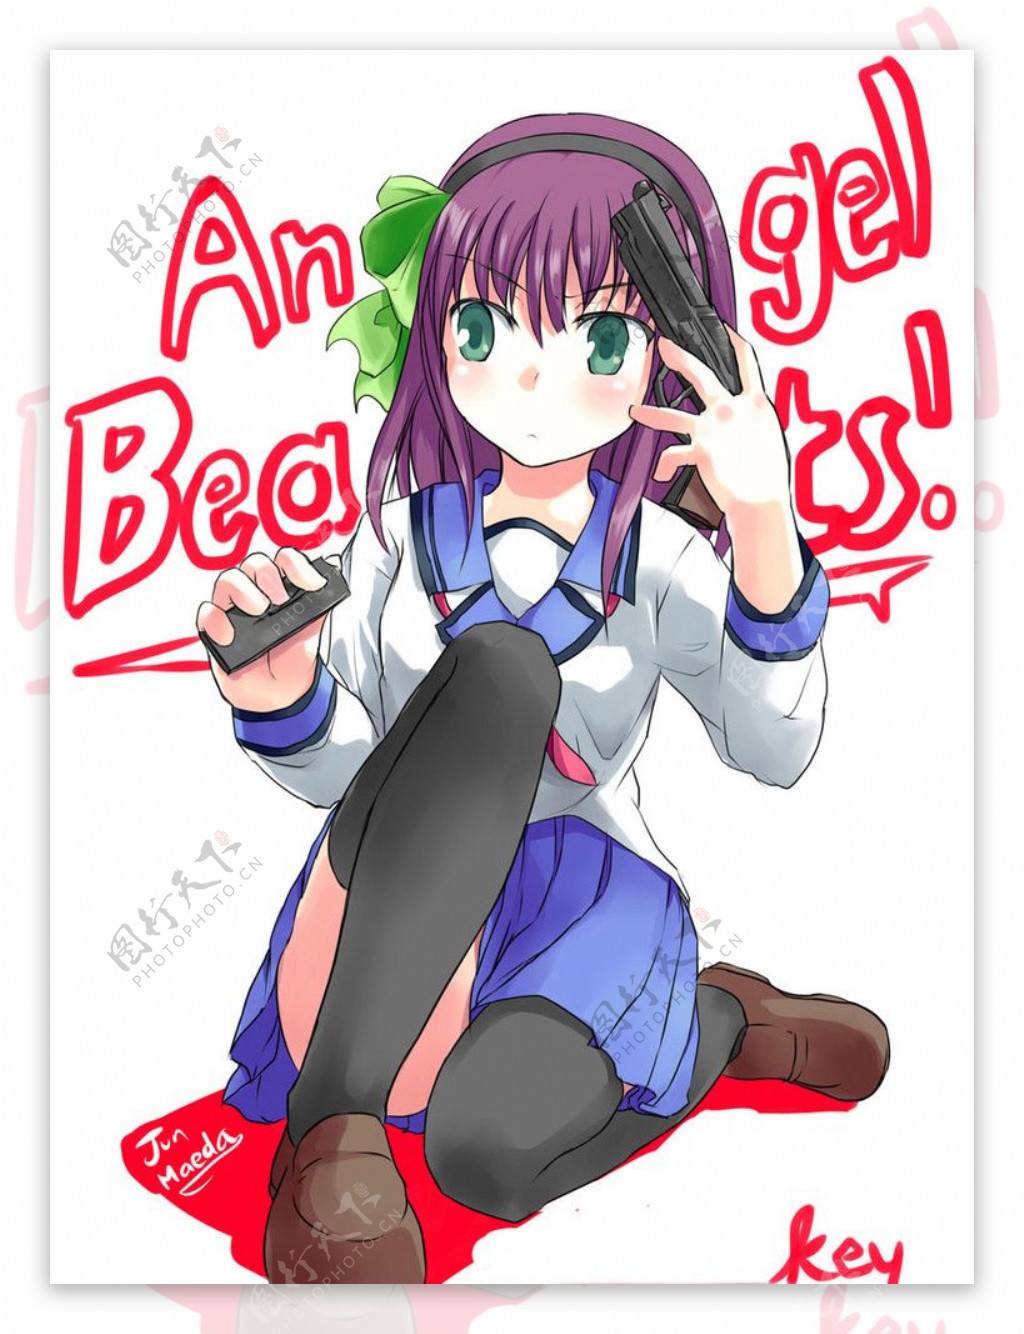 AngelBeats漫画图片